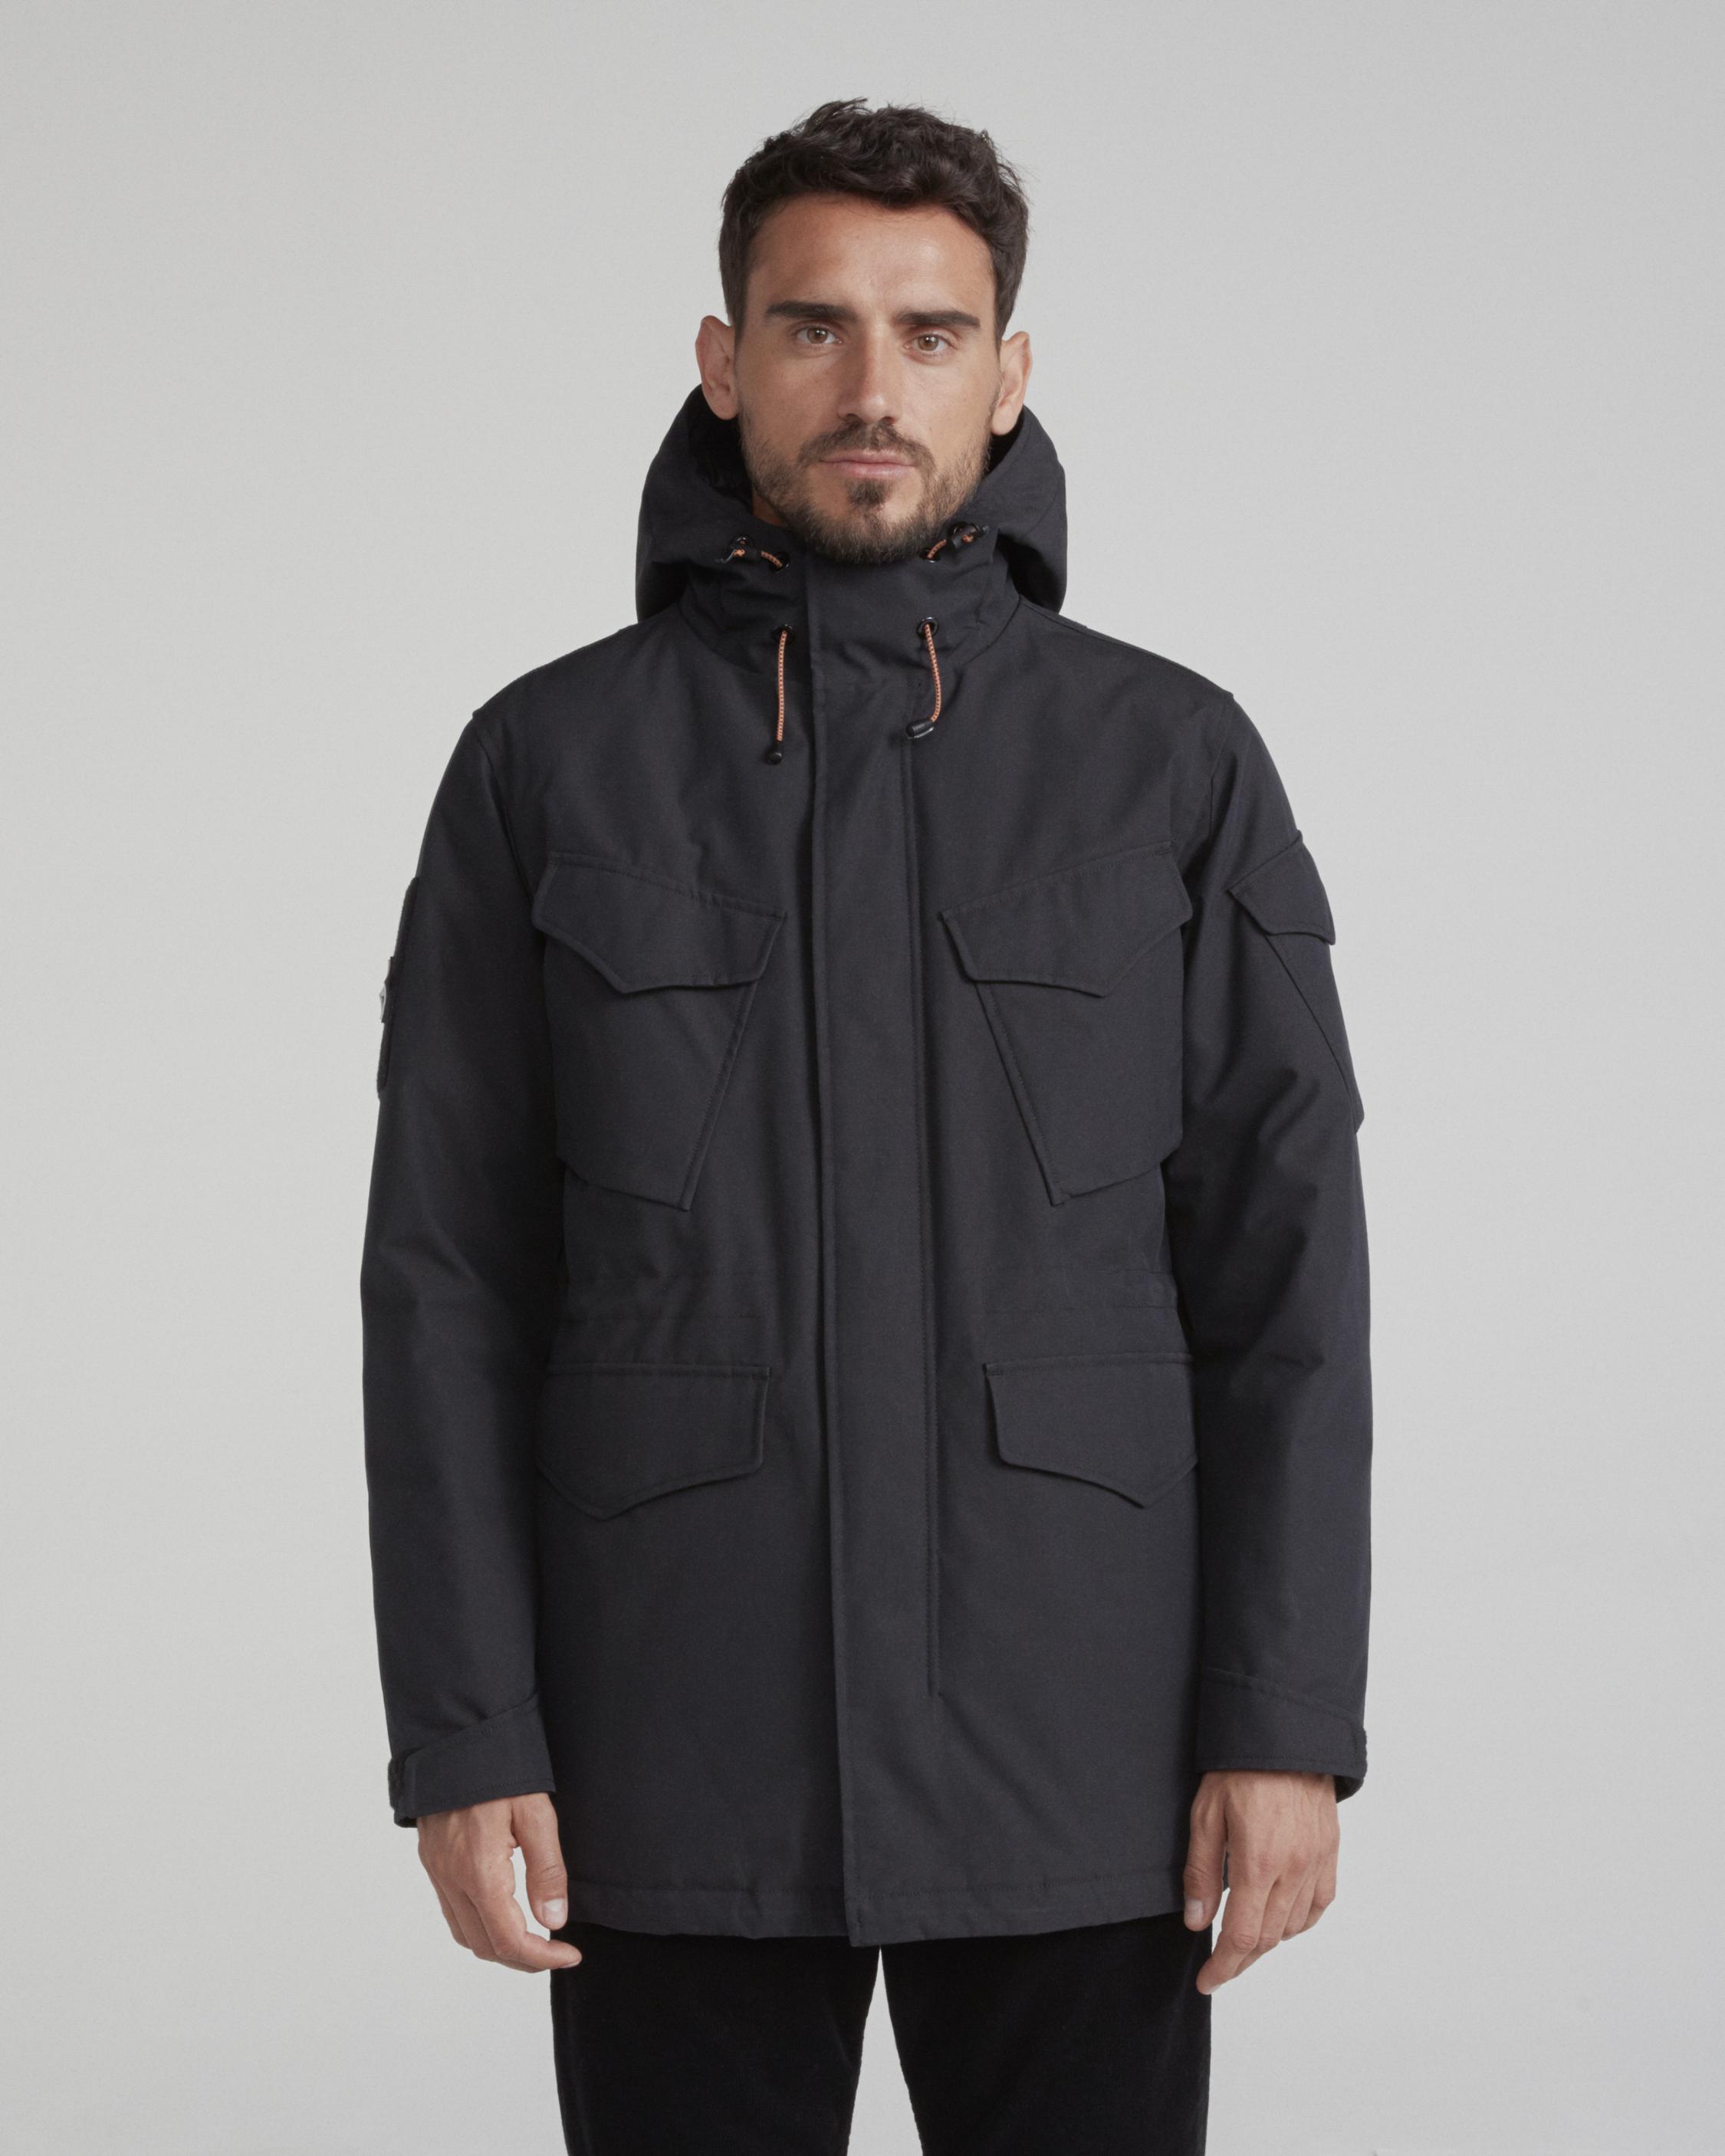 Men's Coats, Jackets & Blazers: Leather Jackets to Sherpa to Flight ...